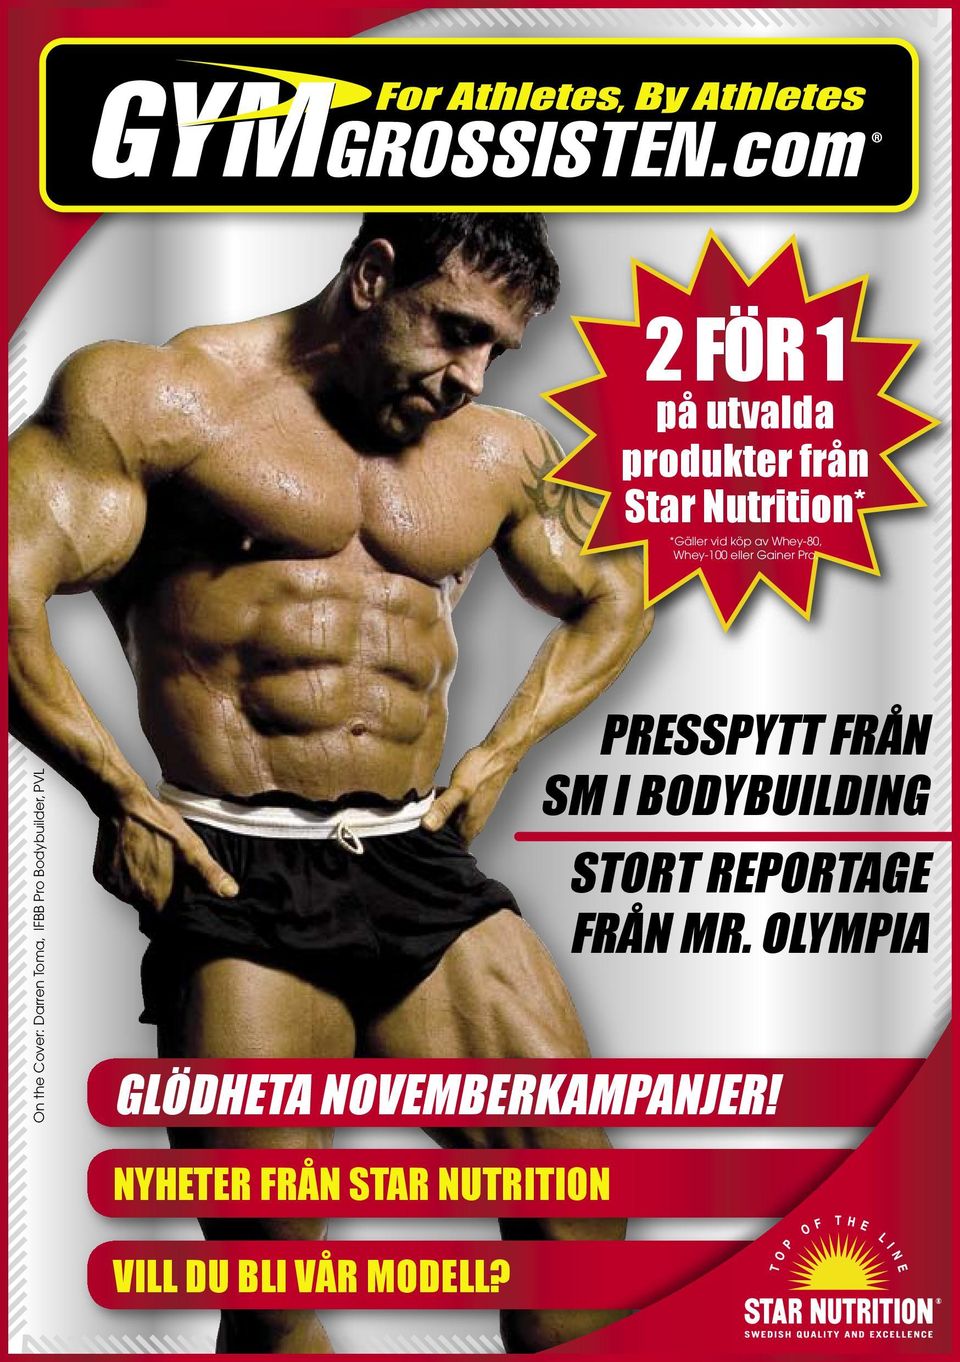 On the Cover: Darren Toma, IFBB Pro Bodybuilder, PVL PRESSPYTT FRÅN SM I